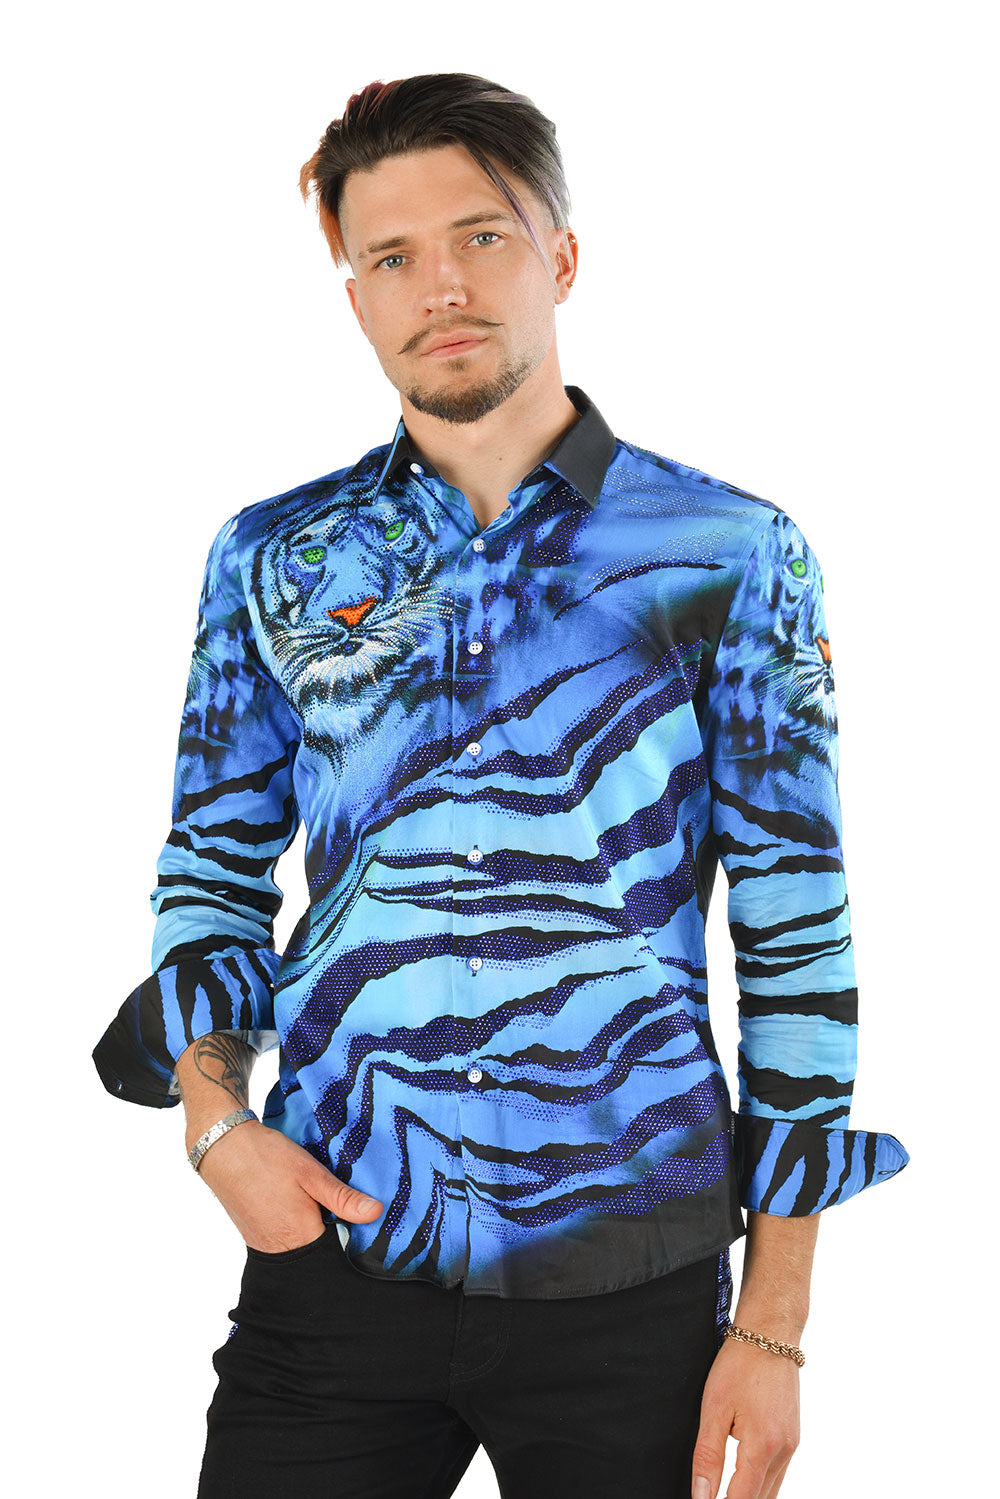 BARABAS Men's Rhinestone Tiger Scratch Prints Long Sleeve Shirt SPR11 Blue